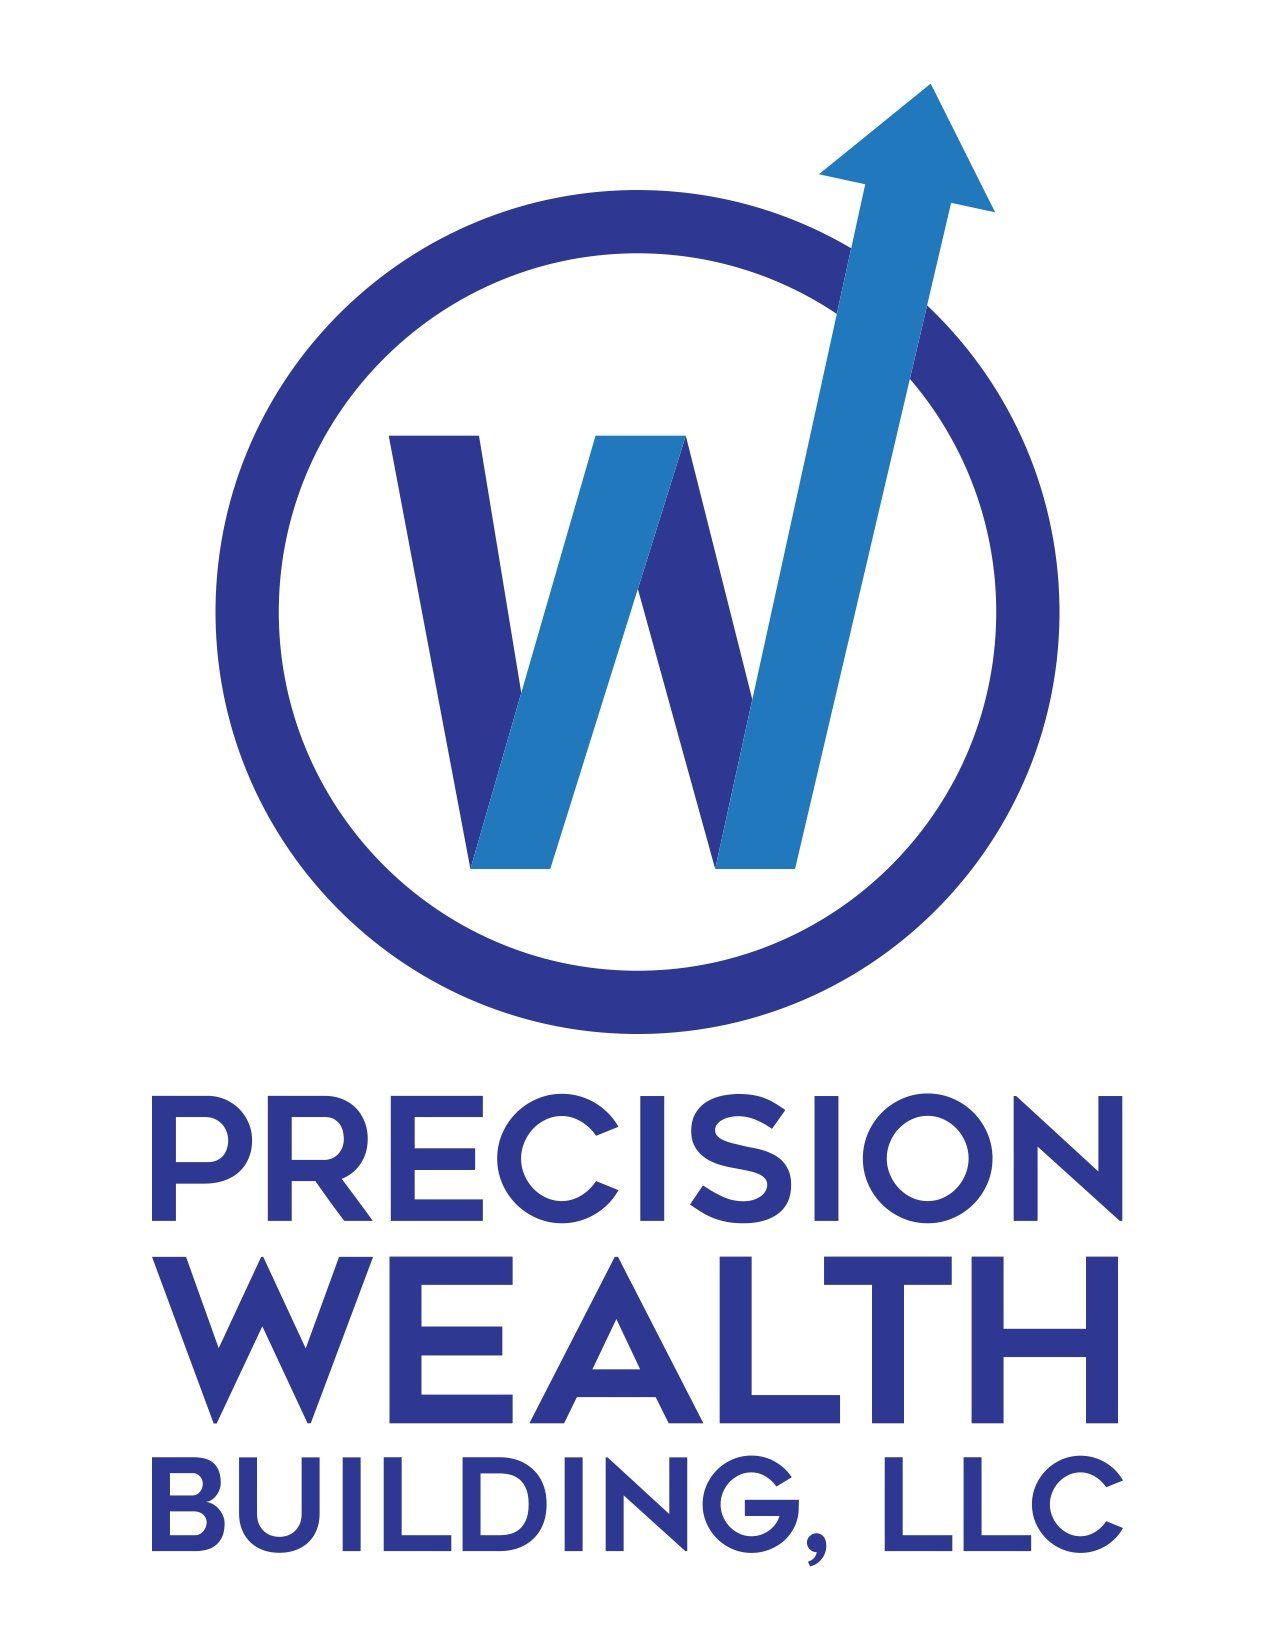 Precision Wealth Building